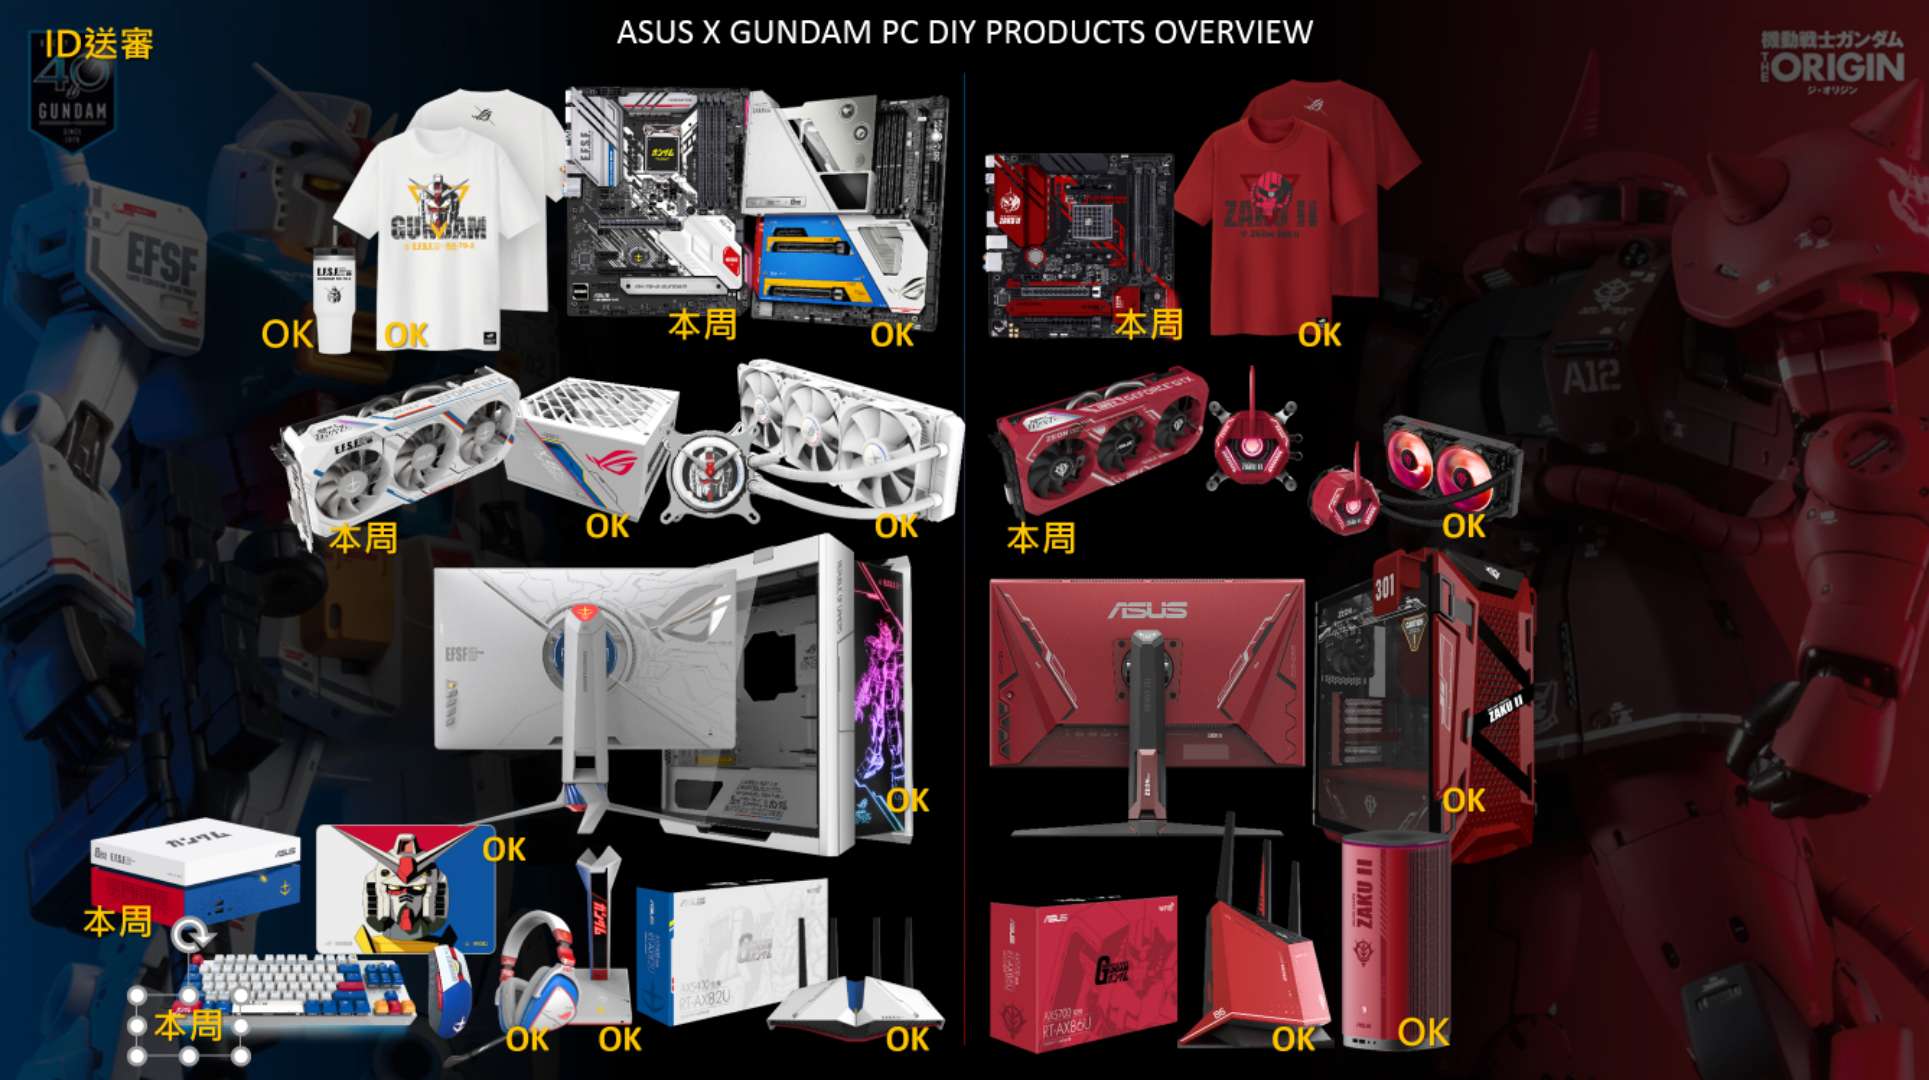 ASUS GUNDAM products